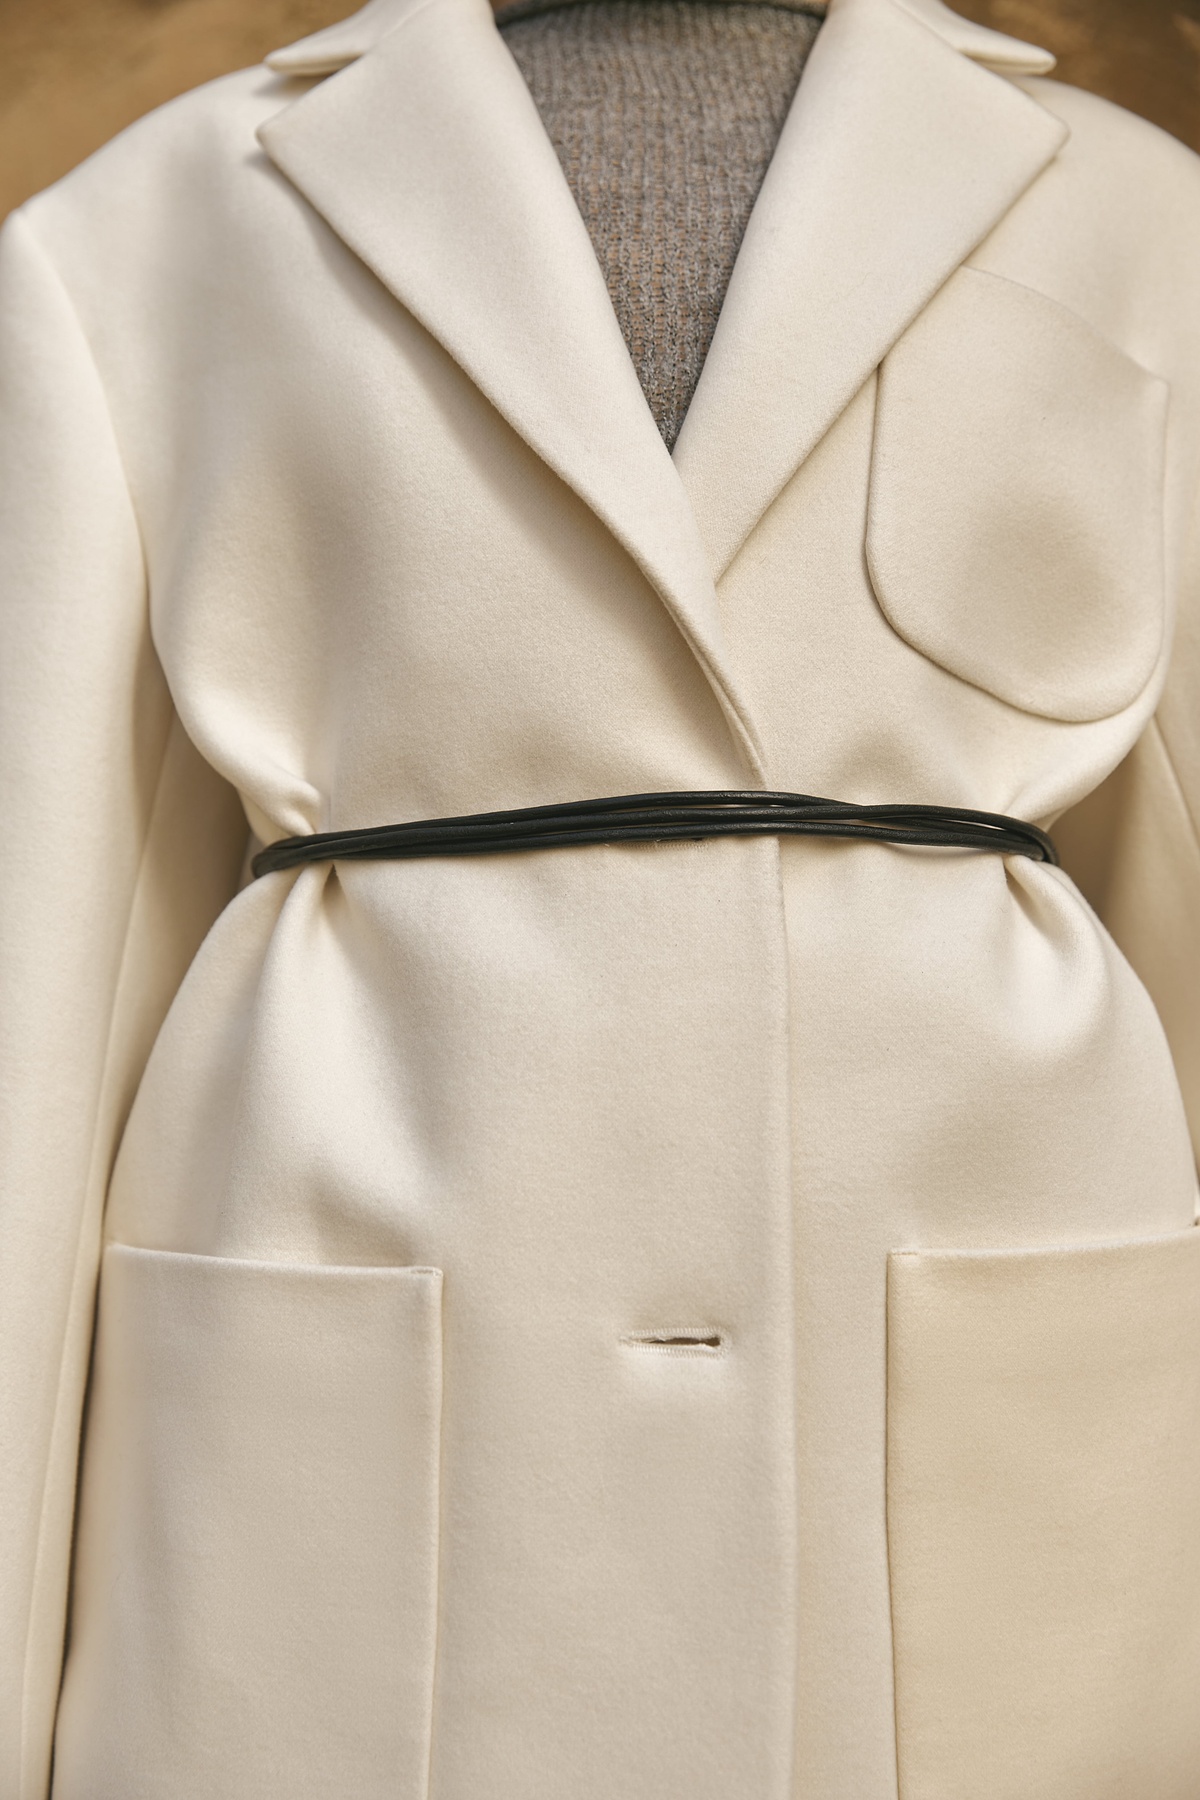 WHITELY Cropped Coat with Pockets